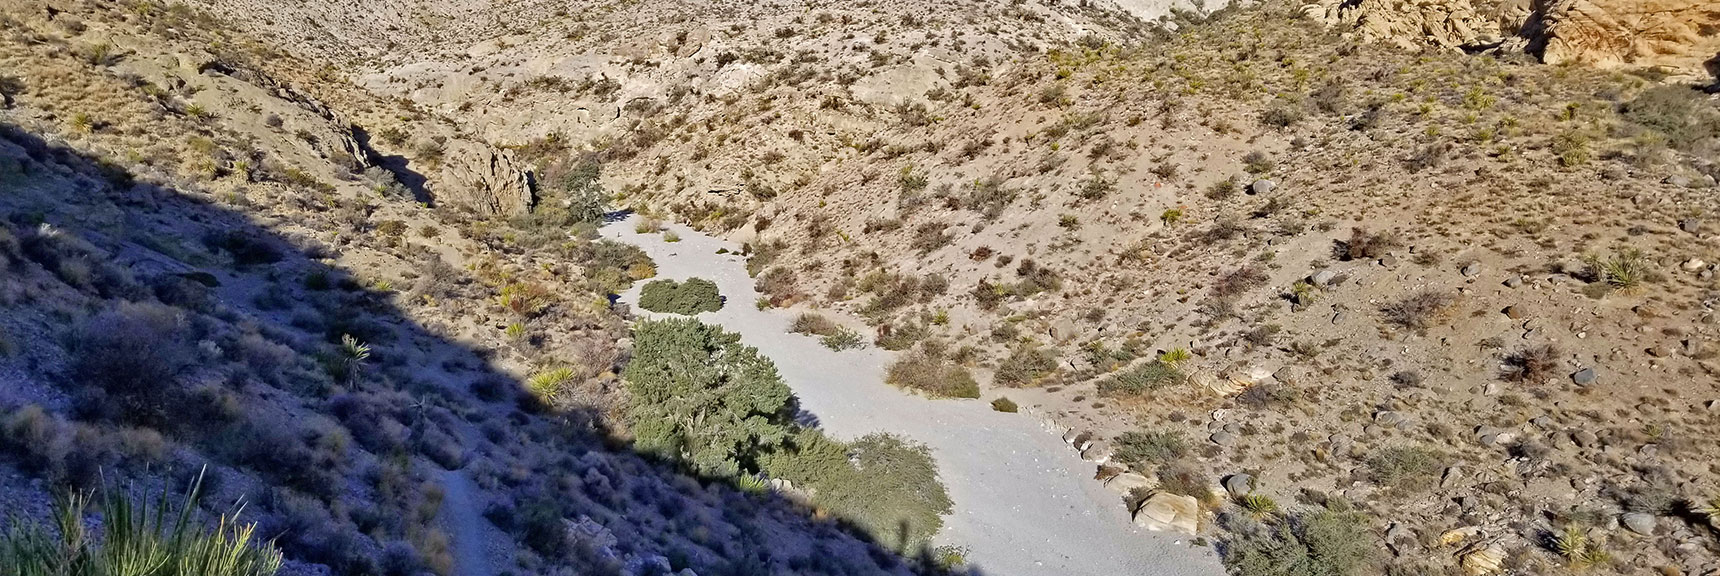 Descending Into Gateway Canyon | Kraft Mountain, Gateway Canyon Loop, Calico Basin, Nevada